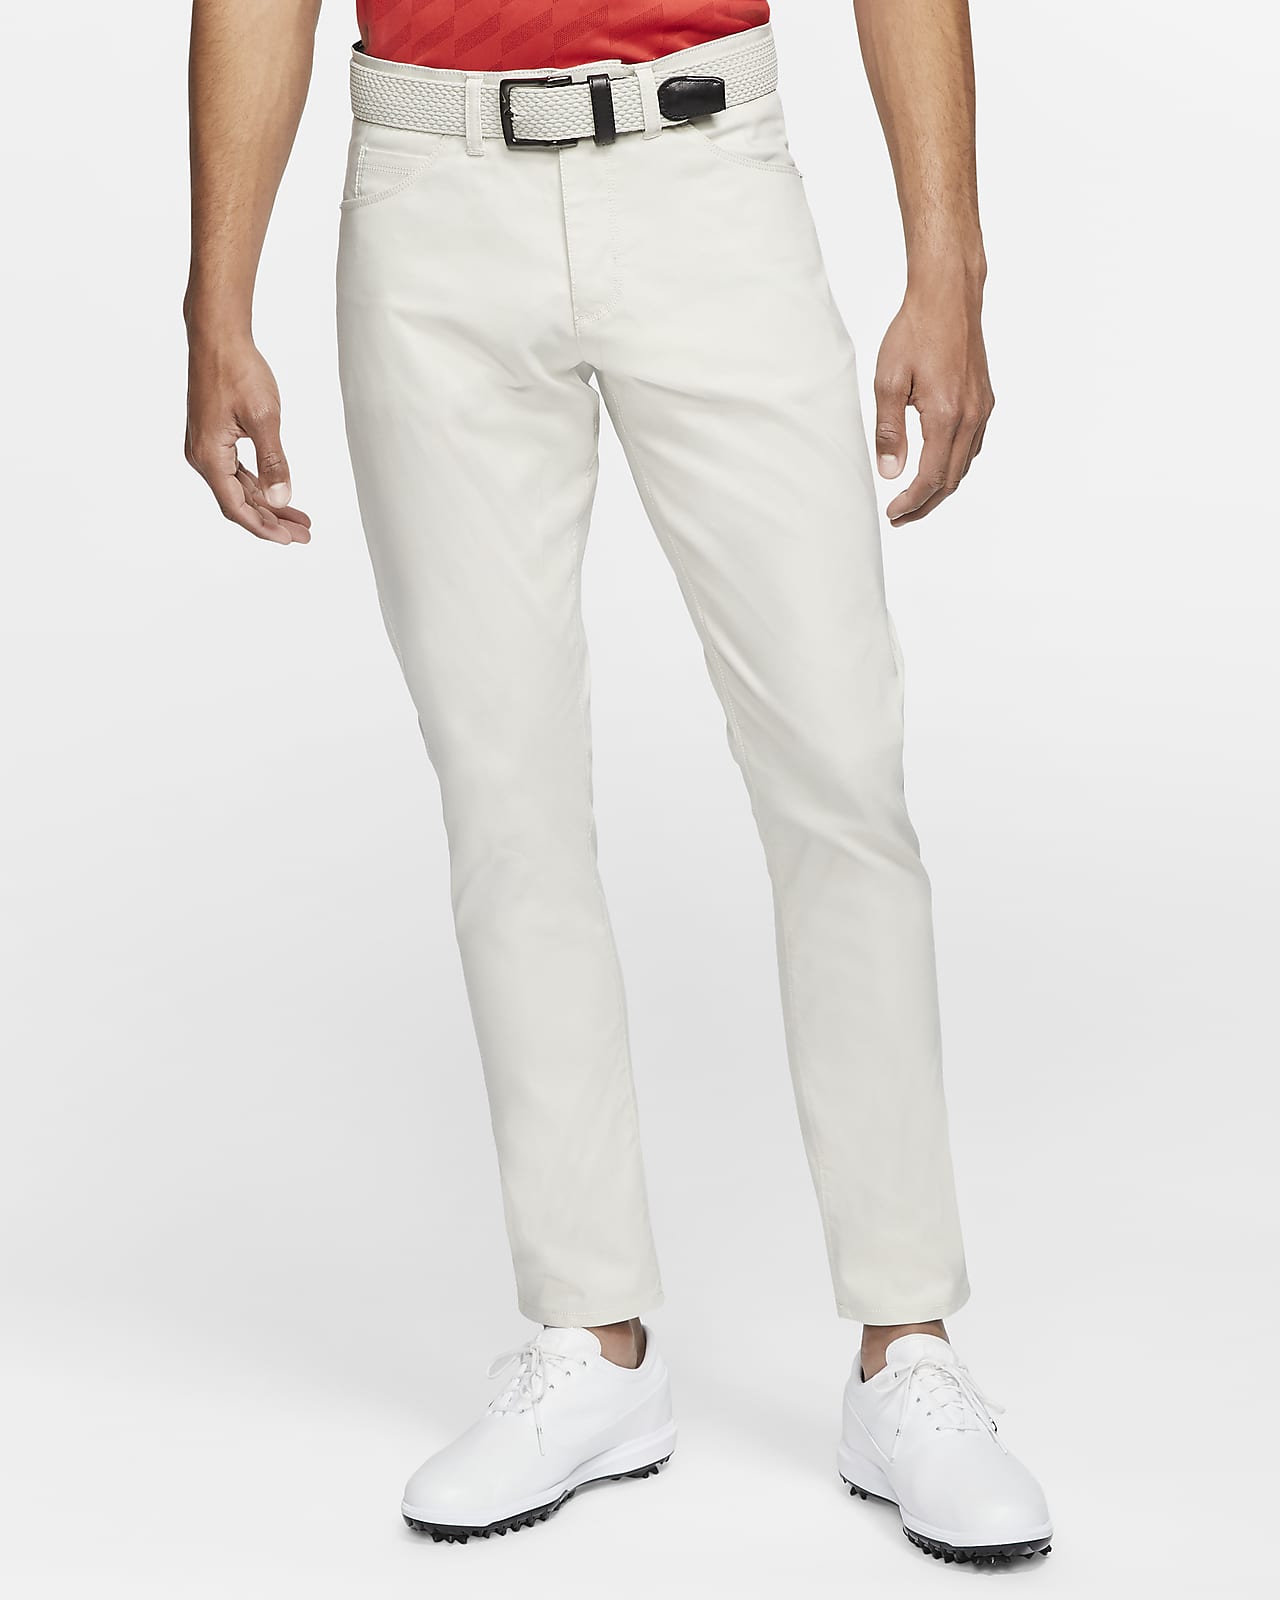 white nike golf pants